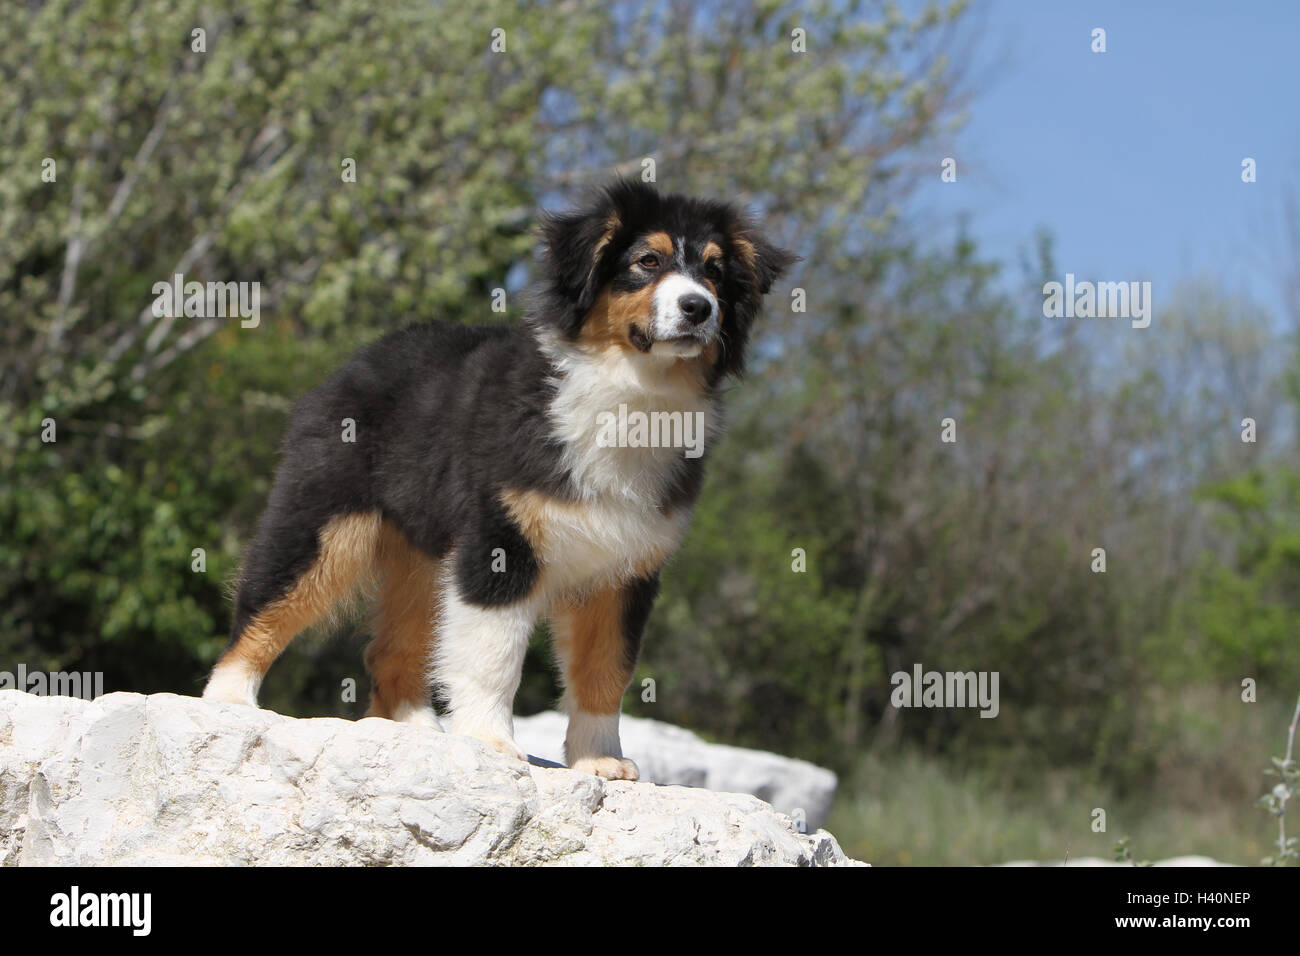 Dog Australian shepherd / Aussie puppy (black tricolor) standing Stock Photo